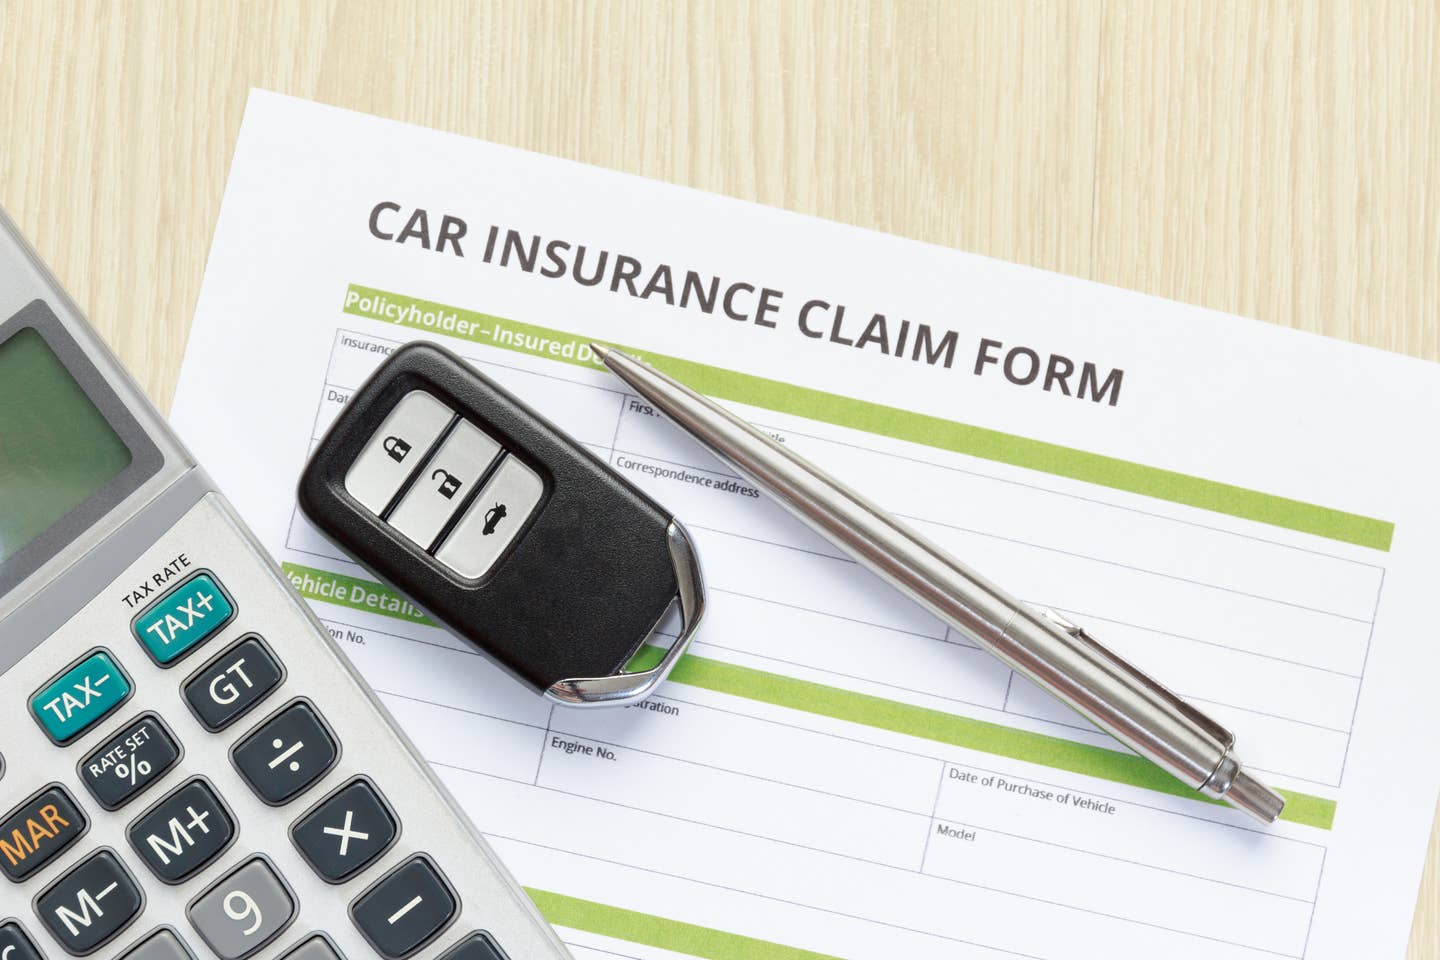 A car insurance claims form